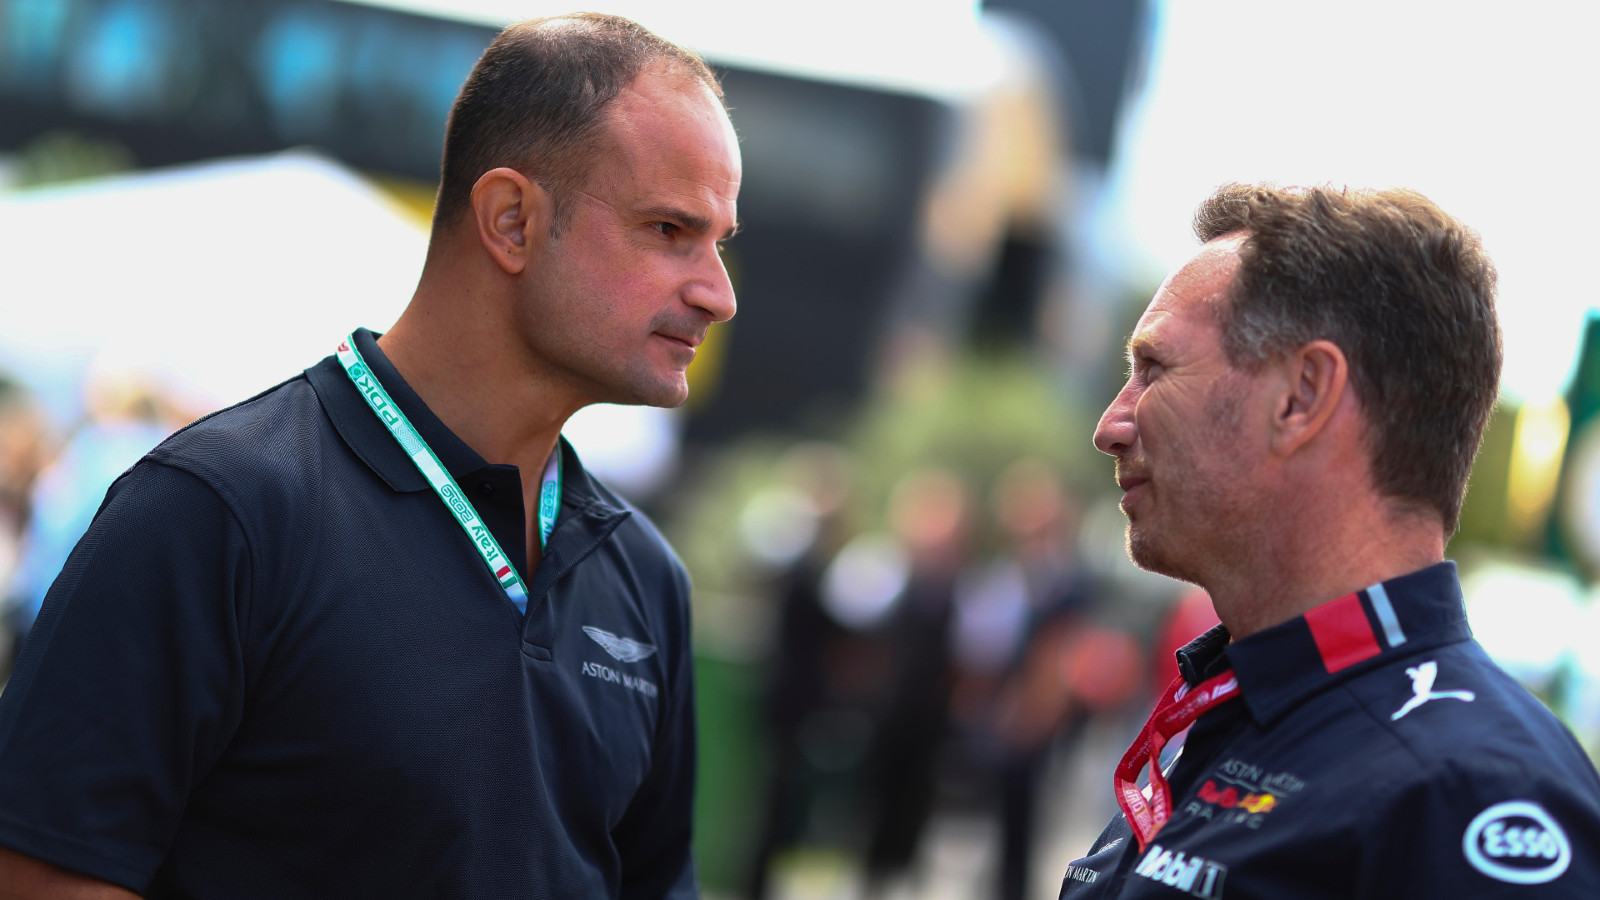 Vitantonio Liuzzi chatting with Red Bull's Christian Horner in 2019.